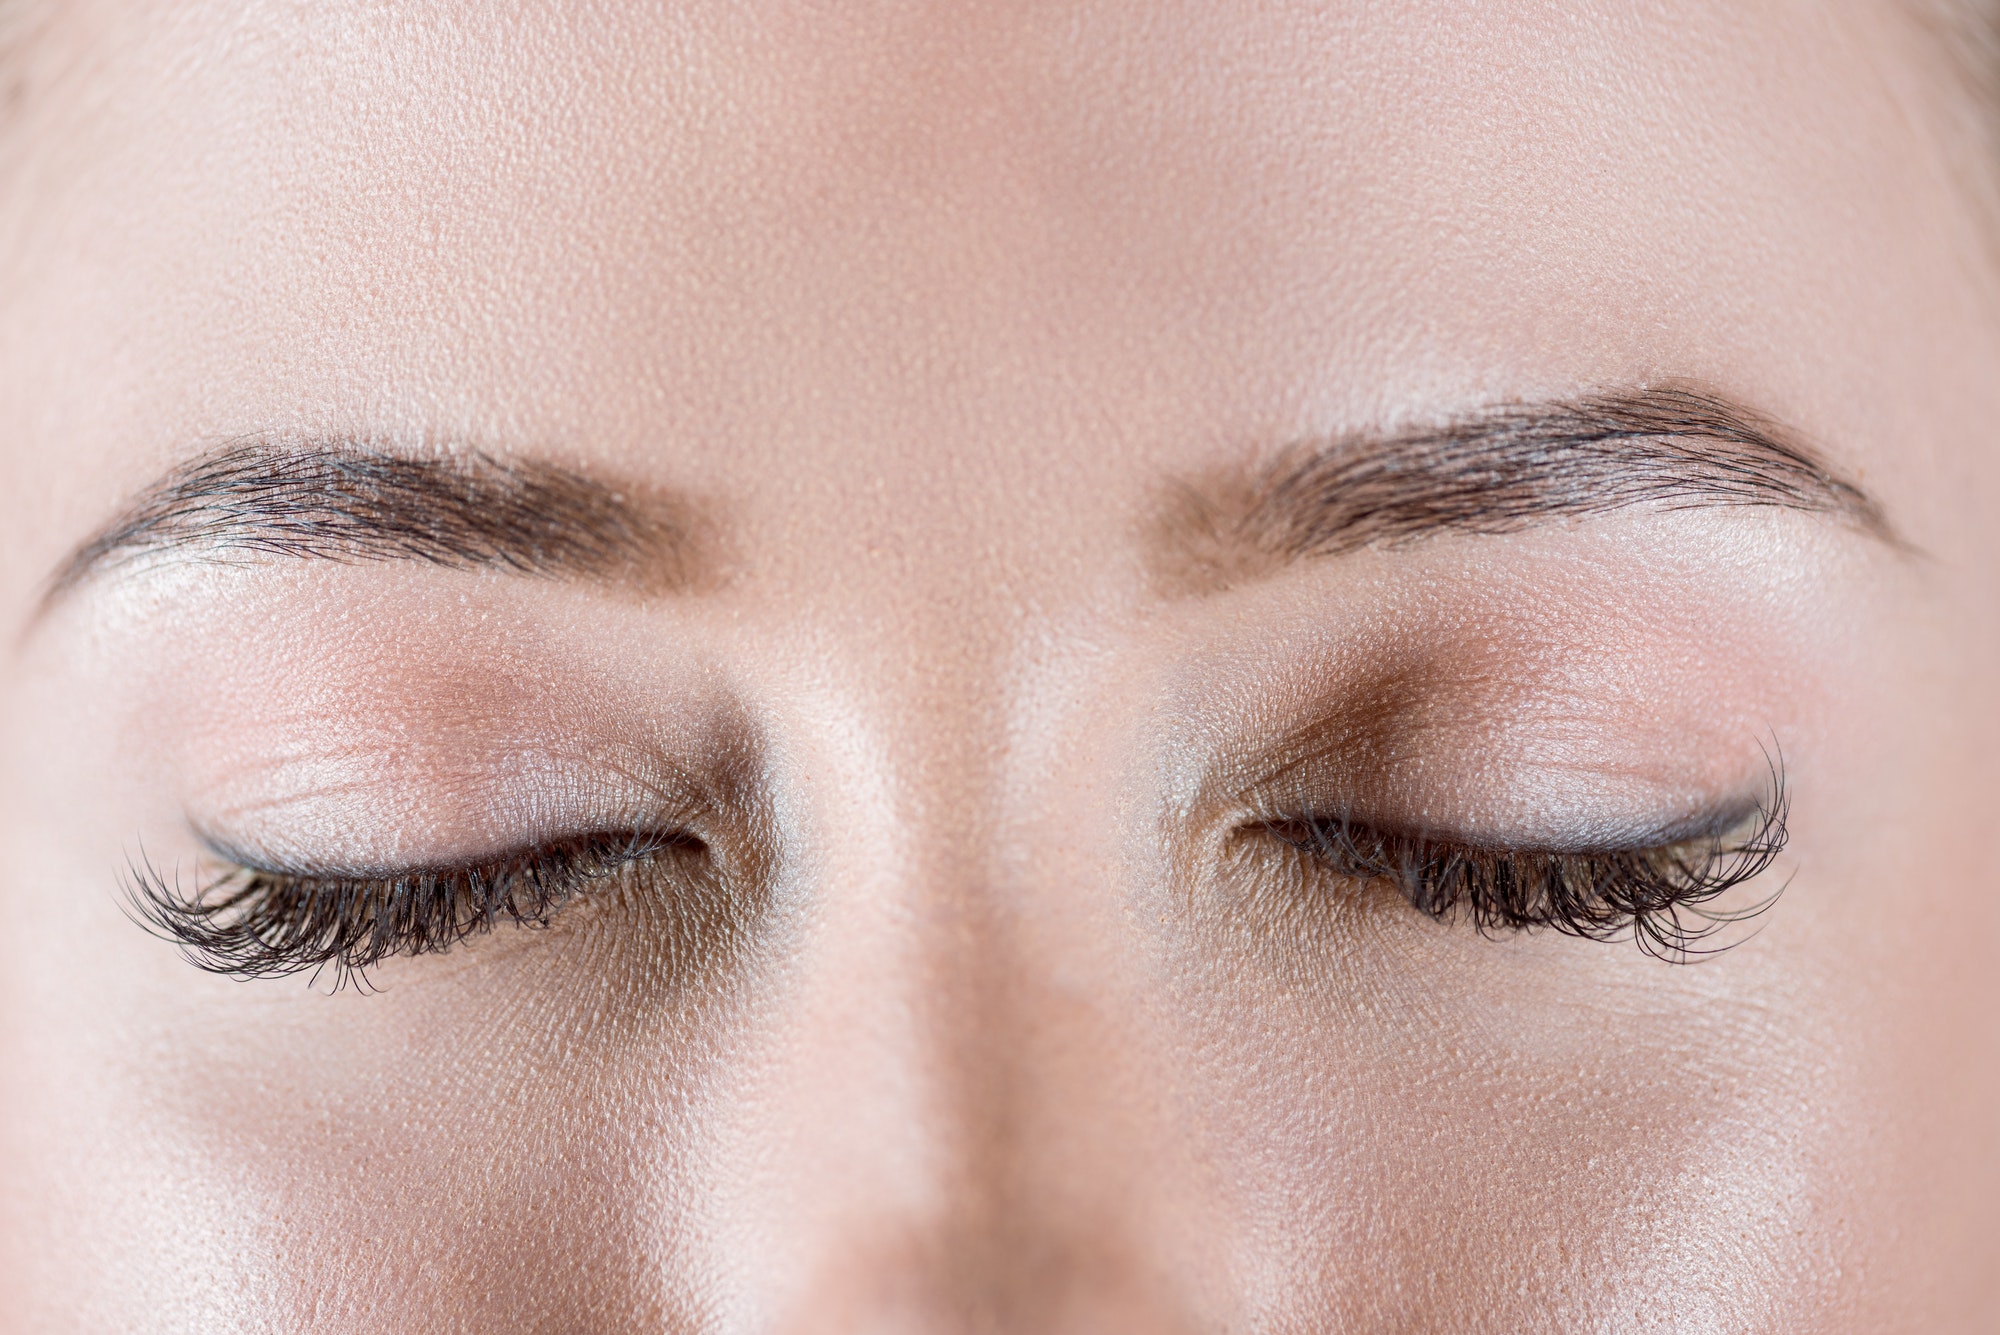 Close-up view of closed female eyes with long eyelashes